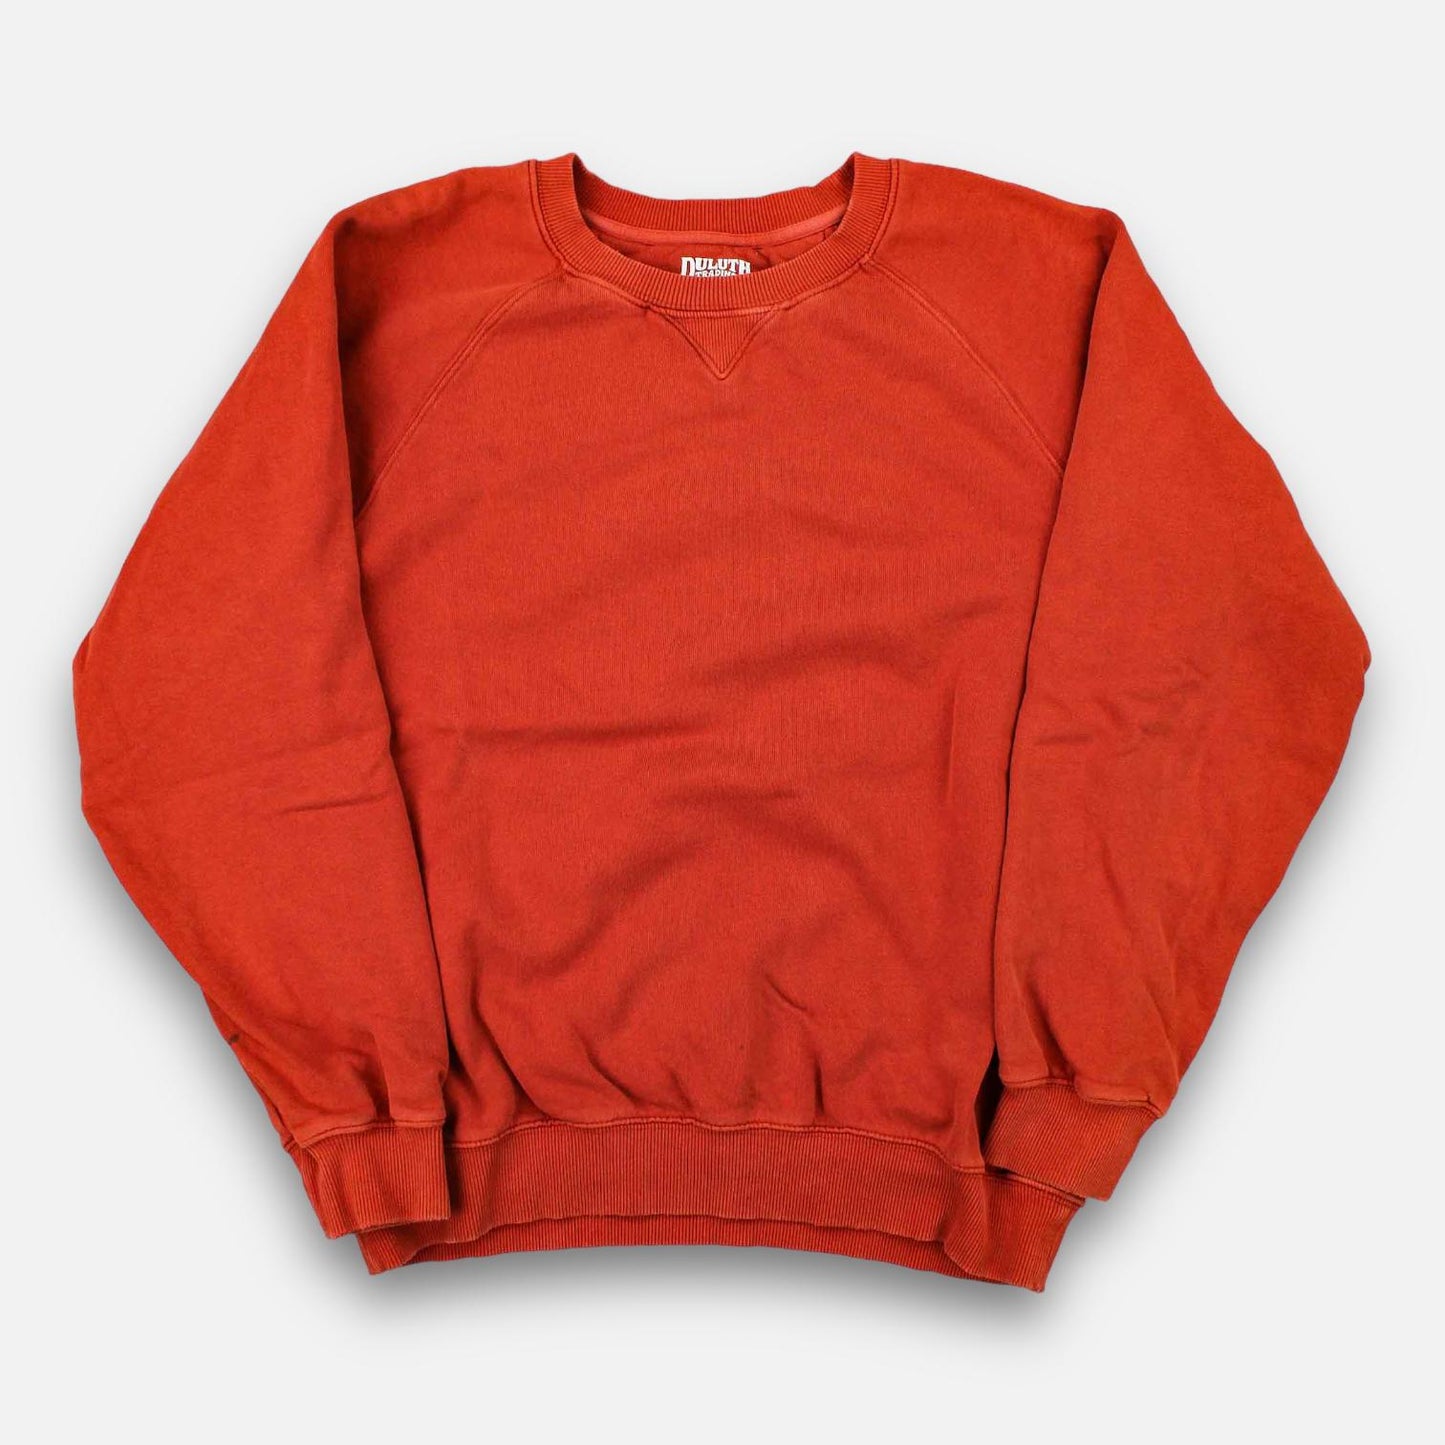 Vintage Basic Sweater Orange - M